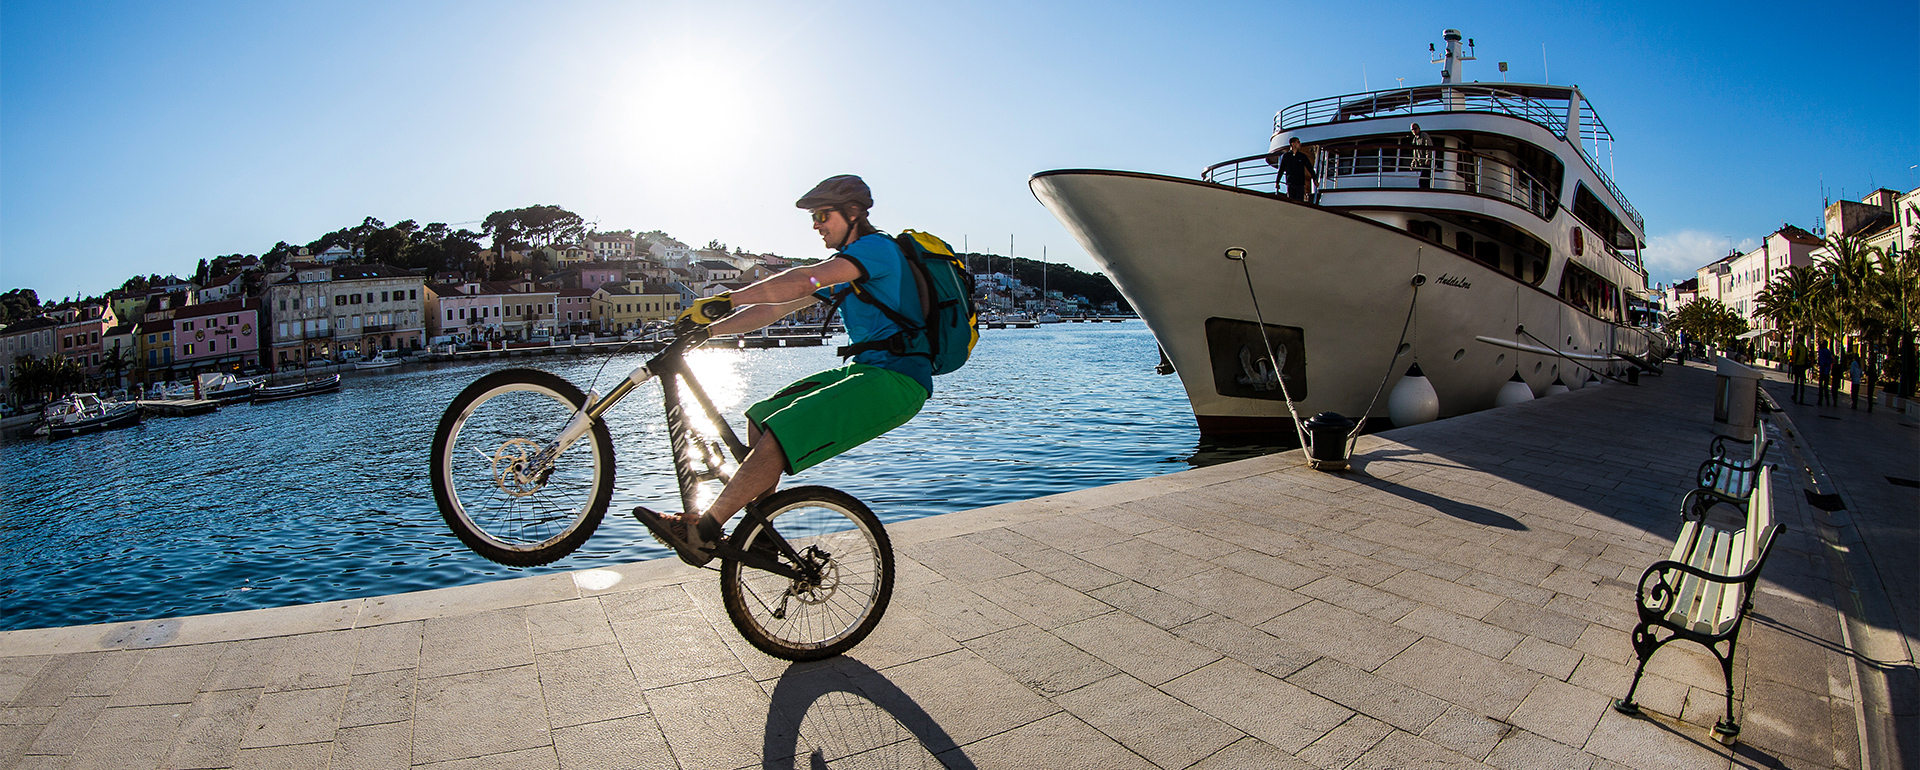 Inselhüpfen Bike und Boot in Kroatien